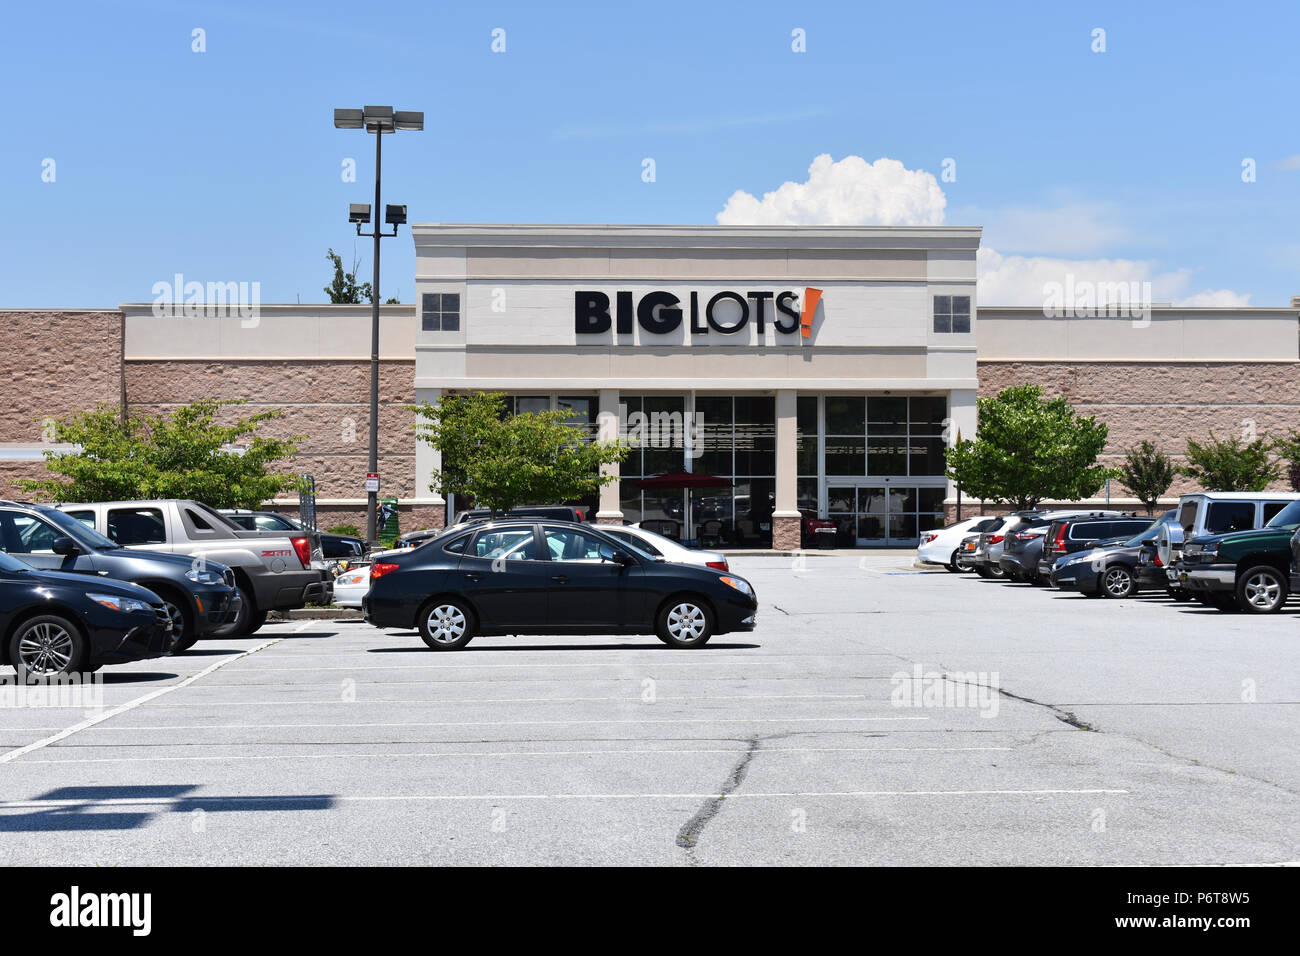 Big Lots retail department store. Stock Photo